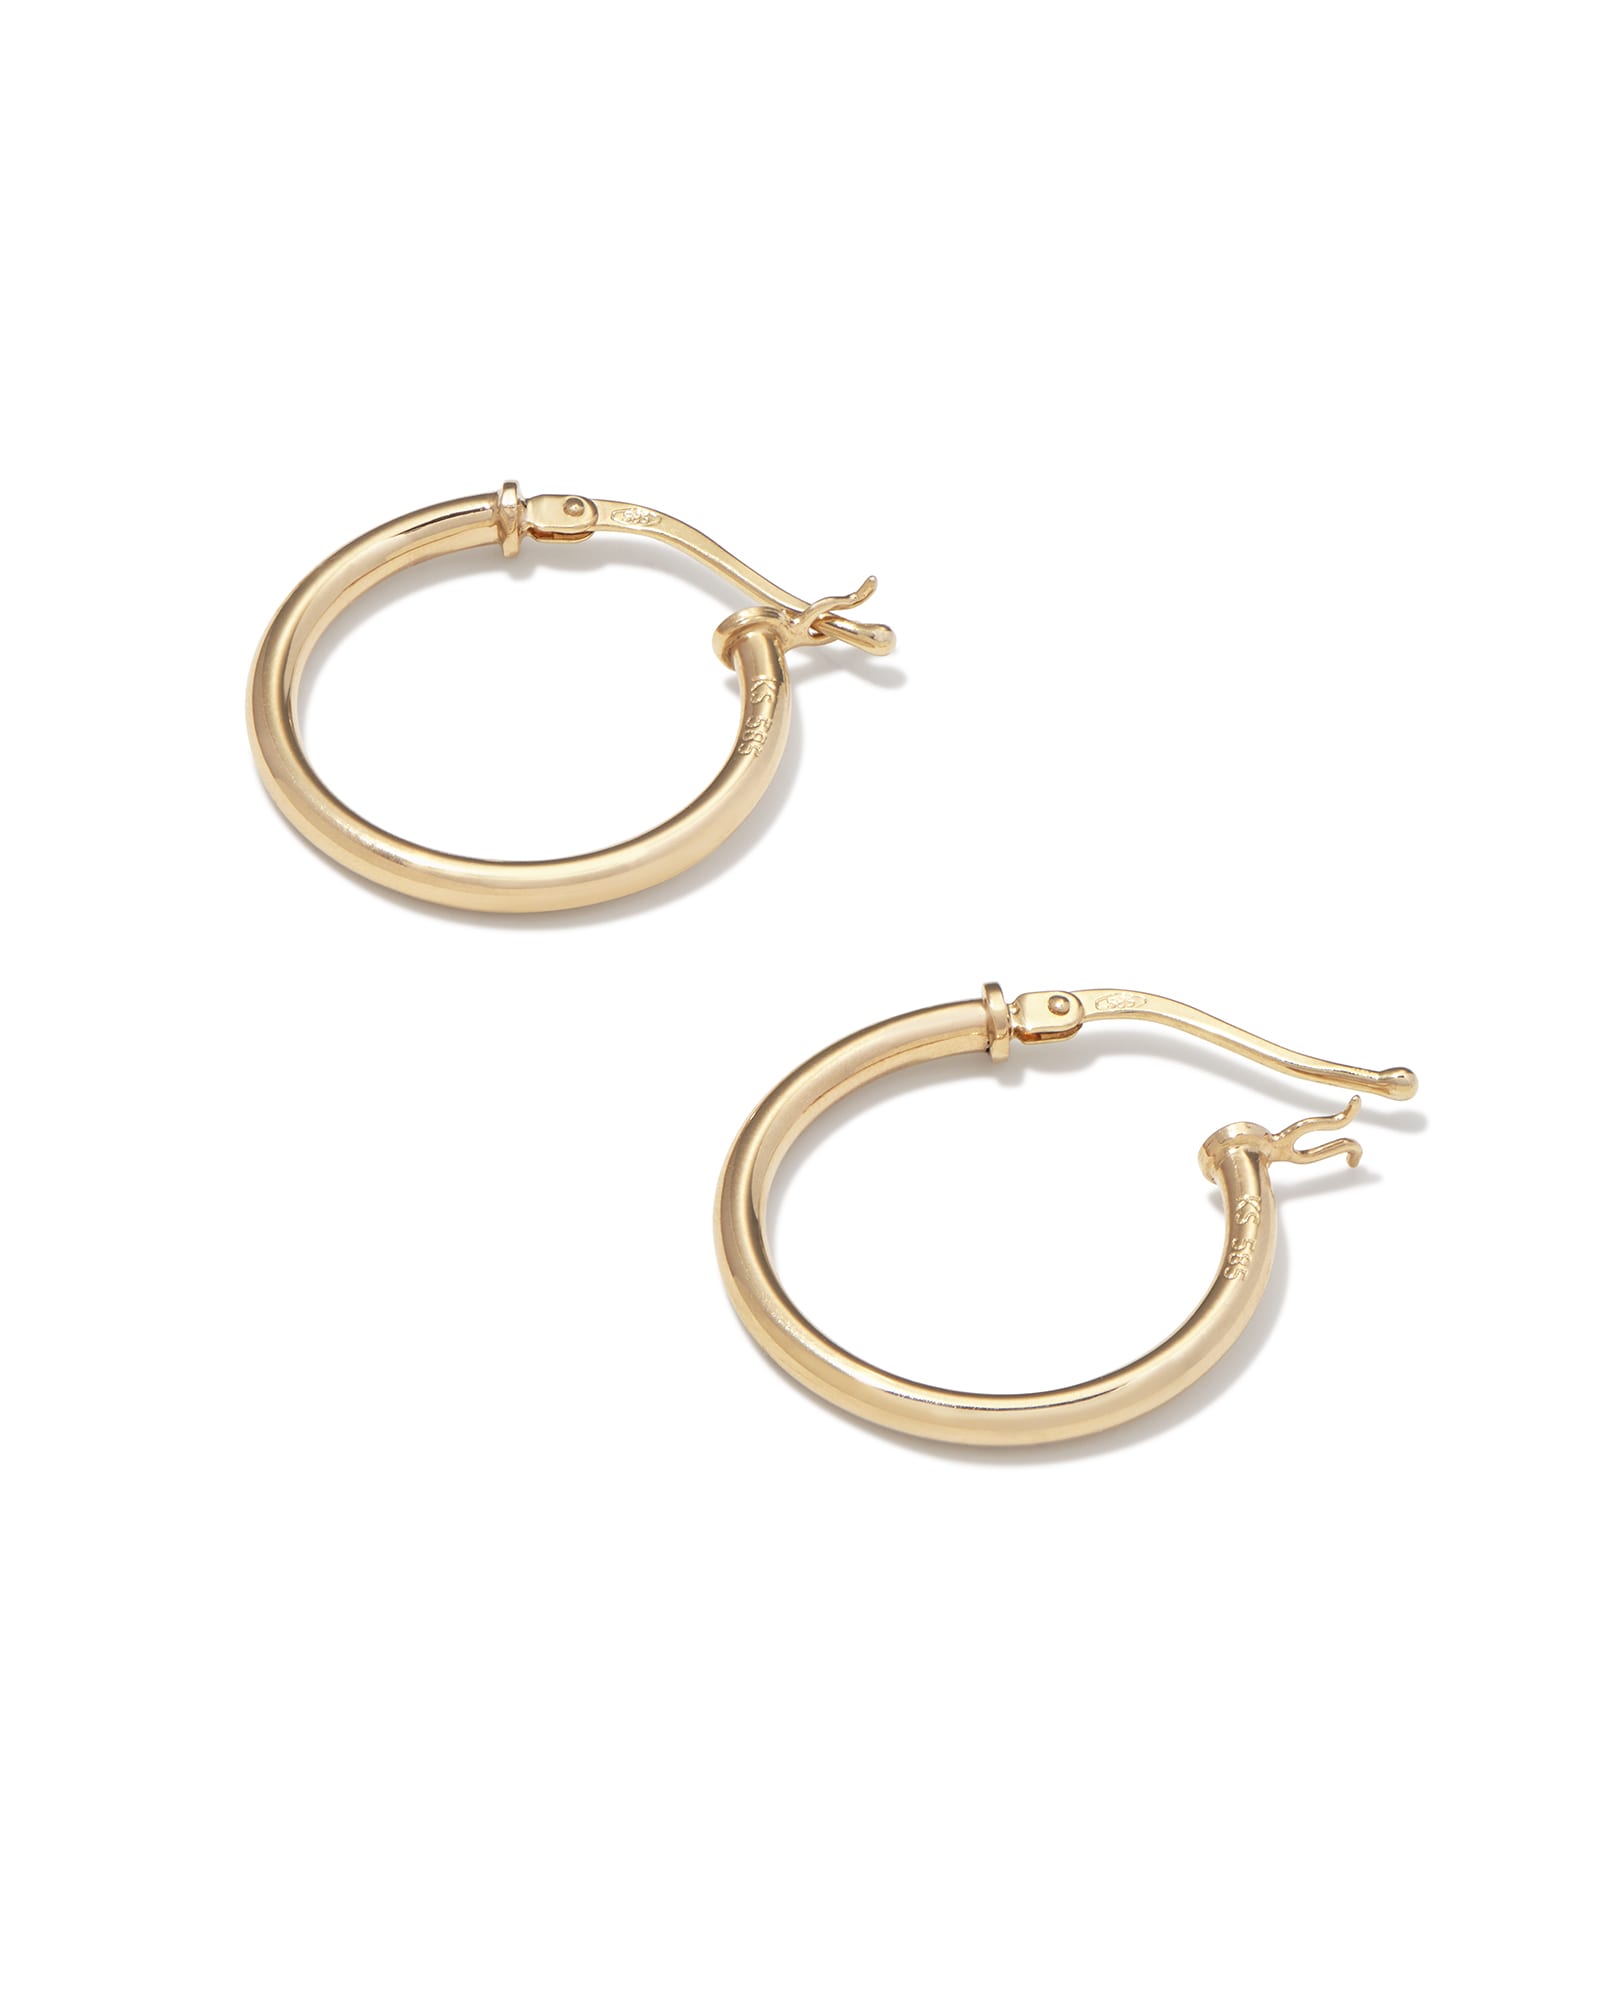 Koa Hoop Earrings in 14K Gold by B & Iya | Portland’s Independent Jewelry Store Small